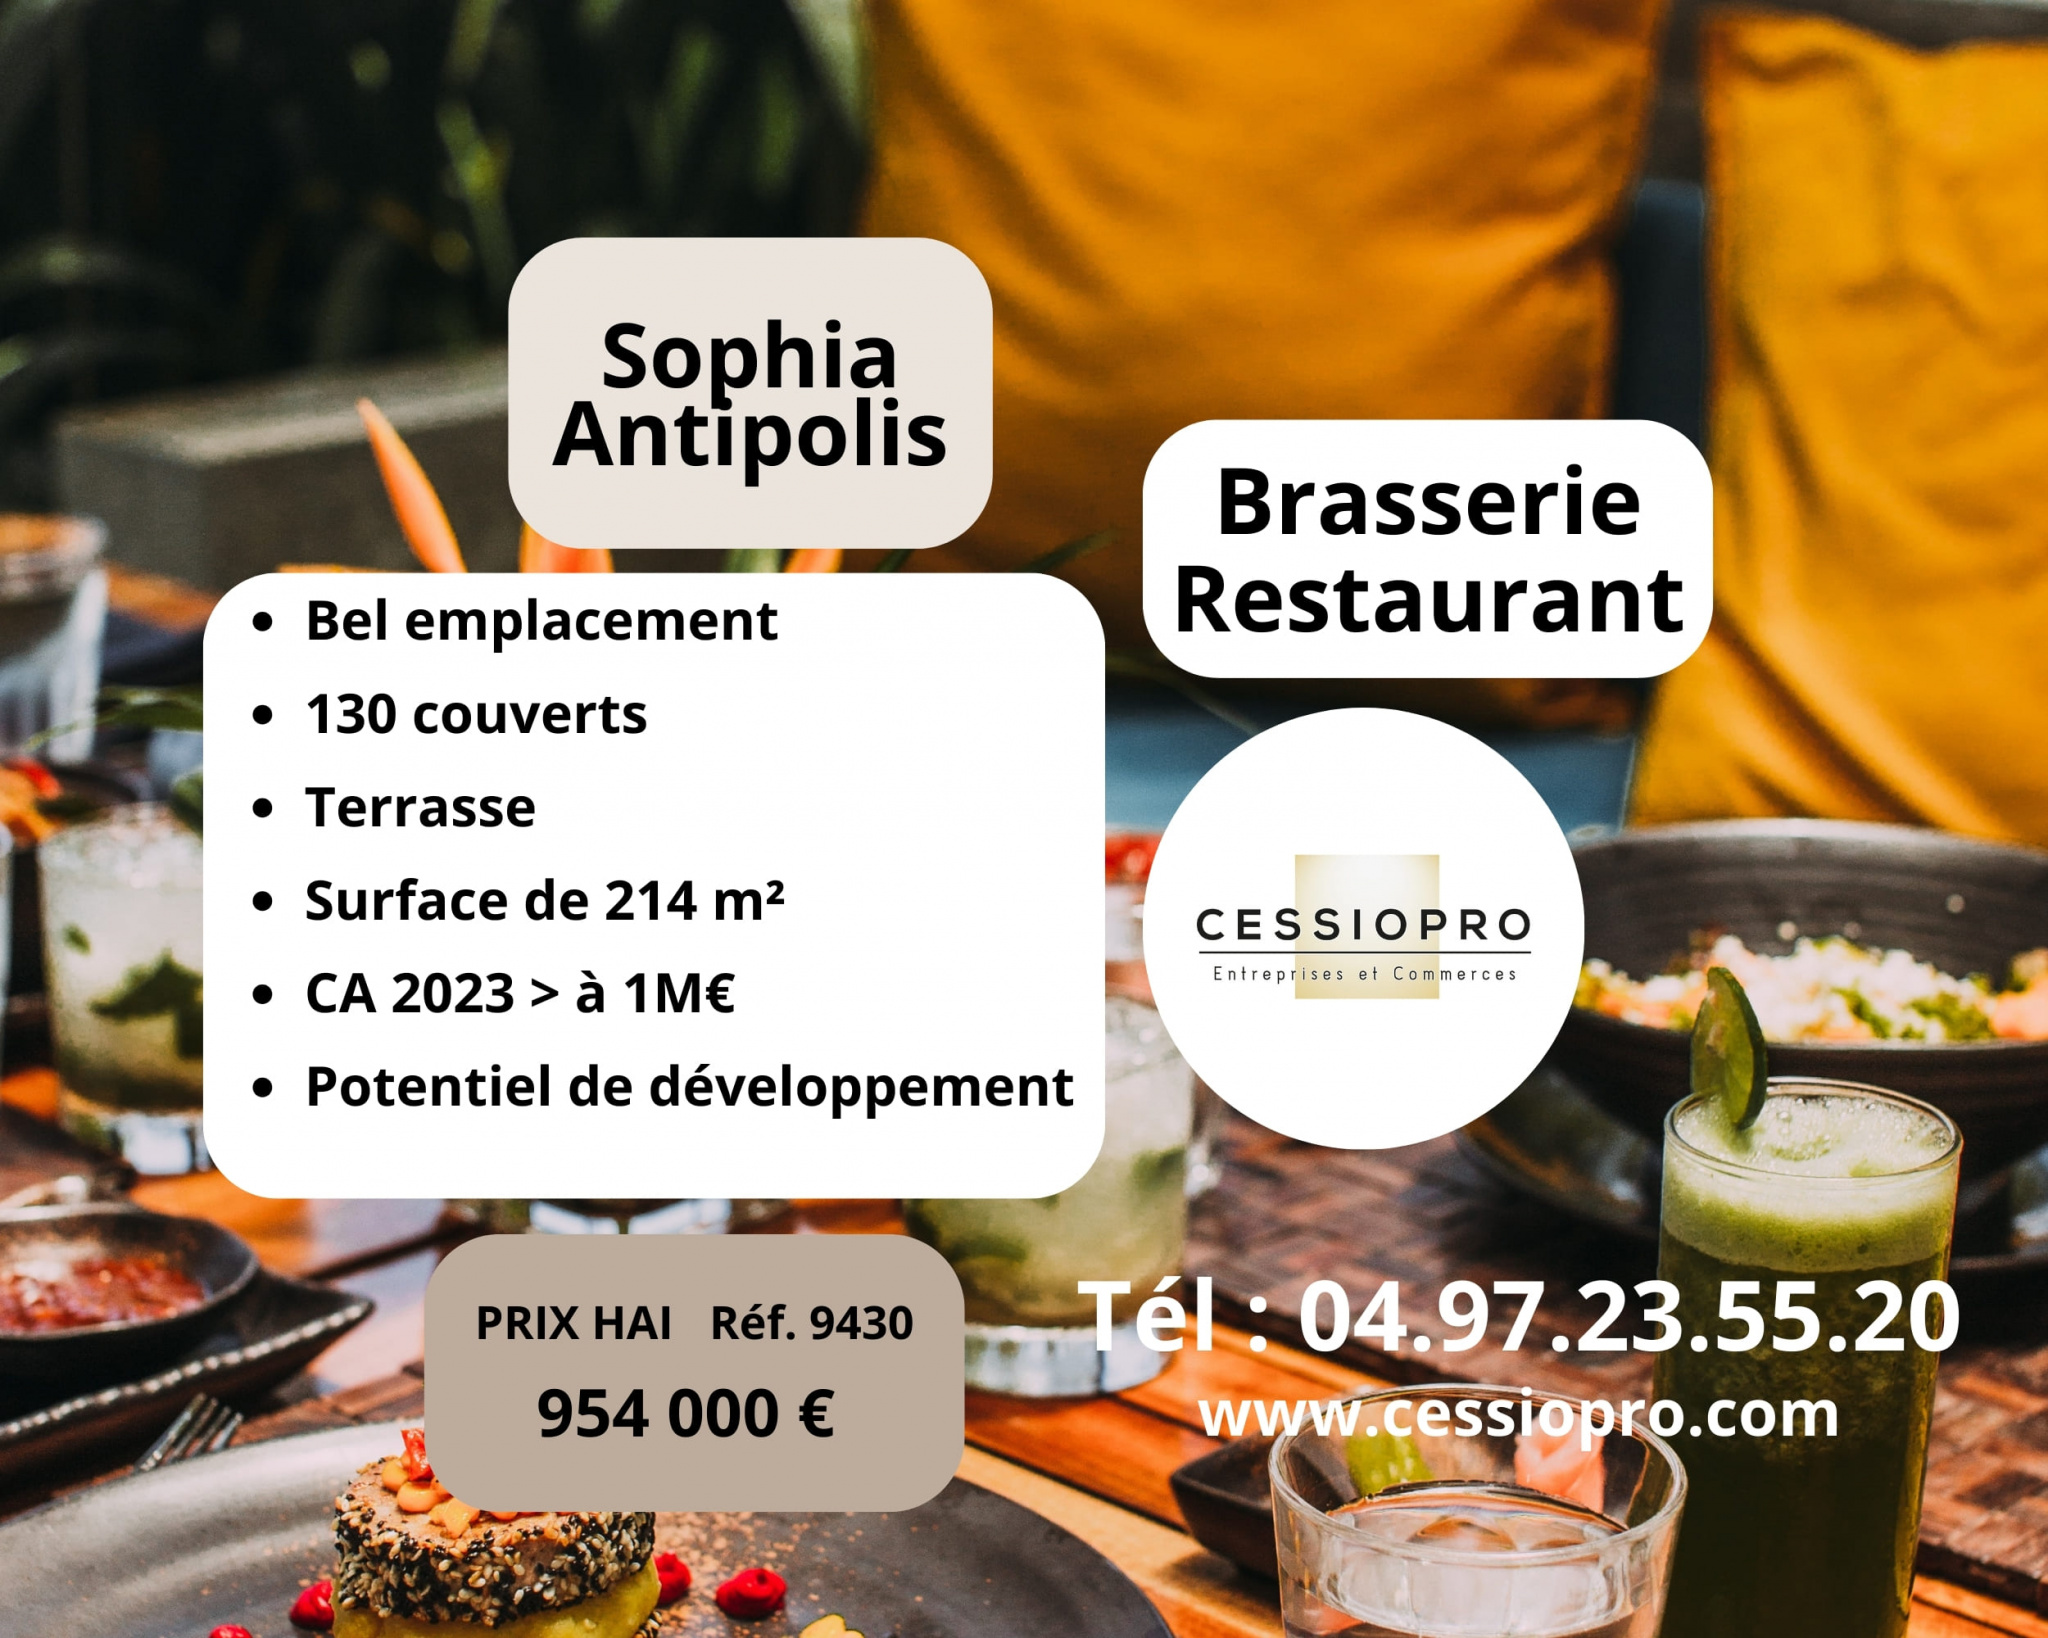 Brasserie Restaurant CA 2023 = 1M€ Sophia Antipolis